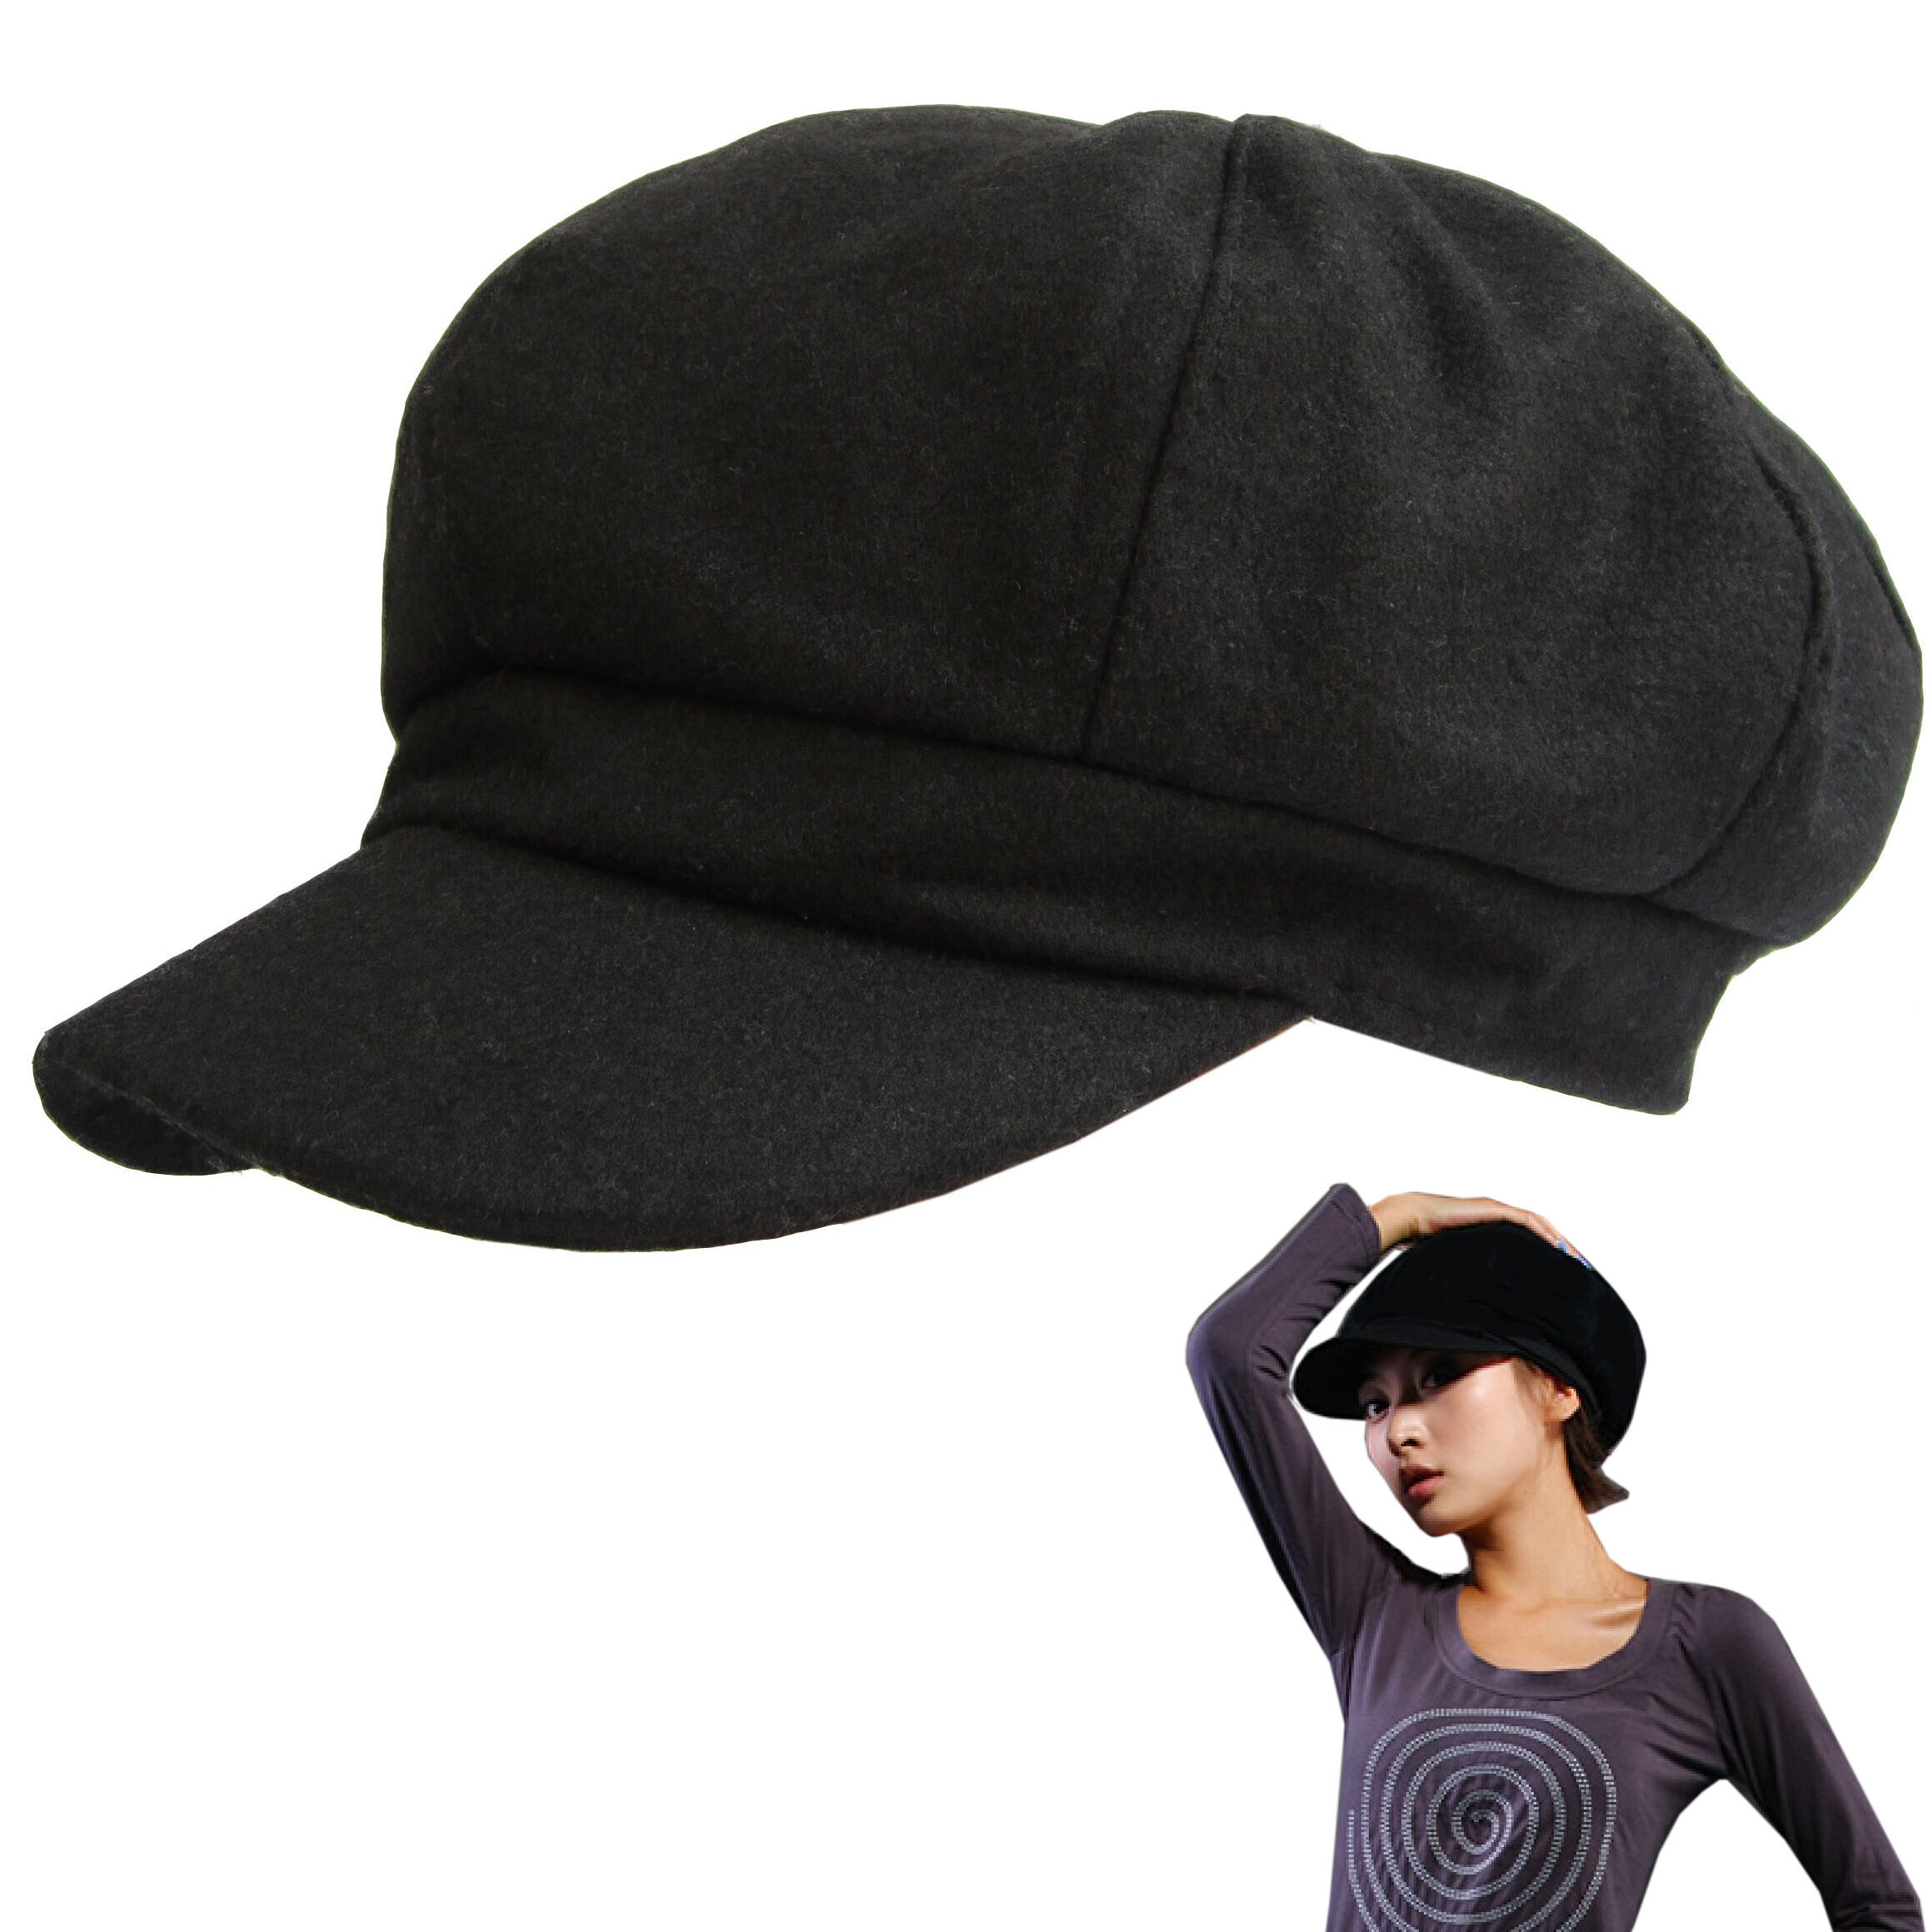 J008wa women's male spring and autumn winter woolen newsboy cap painter cap fashion octagonal hat